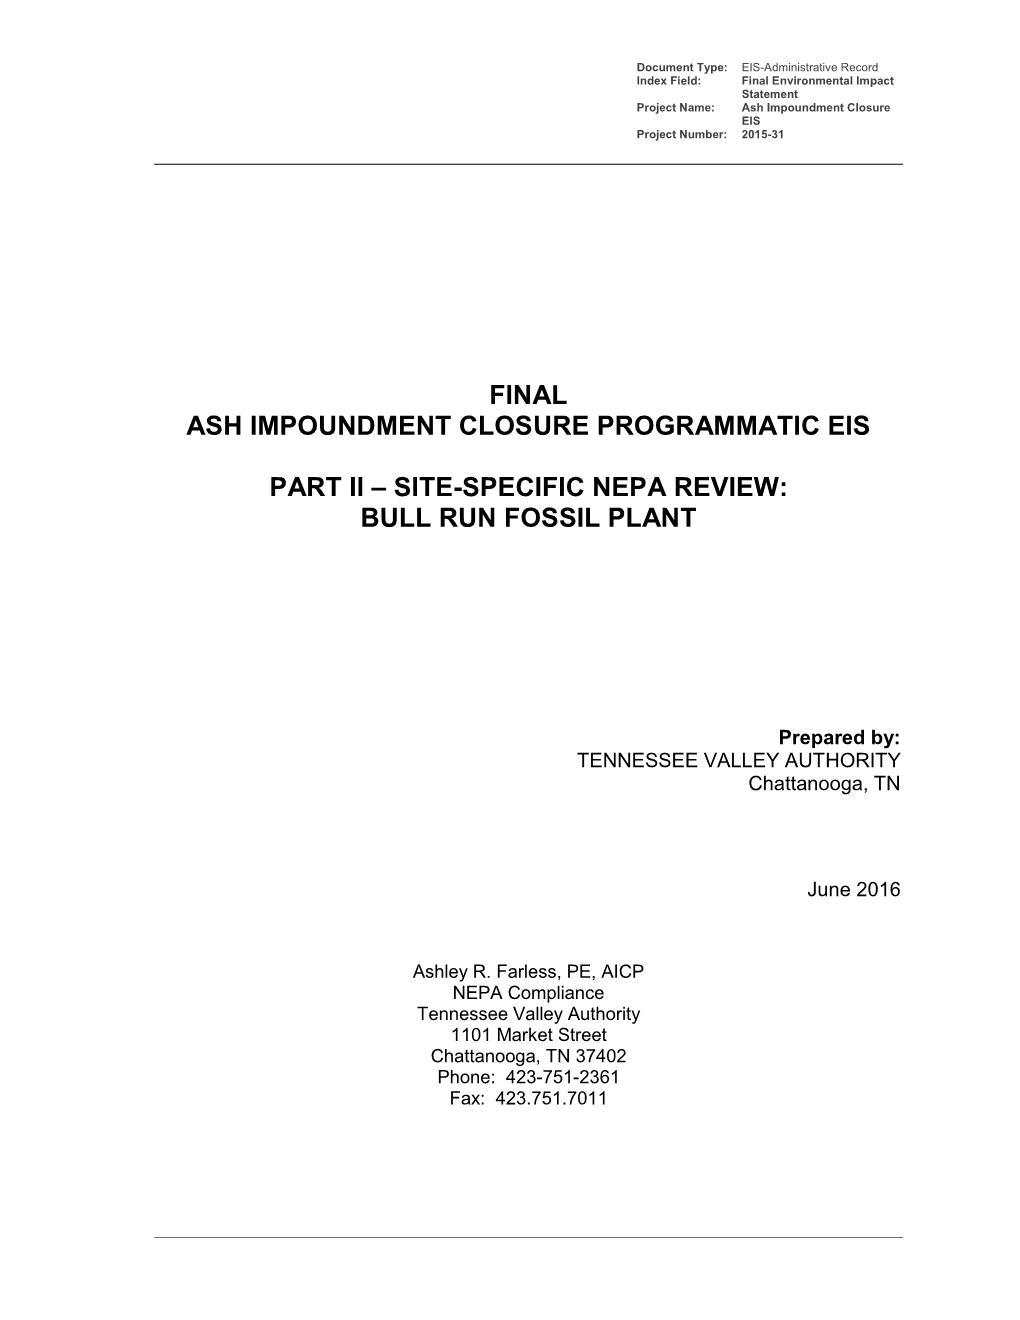 Final Ash Impoundment Closure Programmatic EIS, Part II -- Site-Specific NEPA Review, Bull Run Fossil Plant